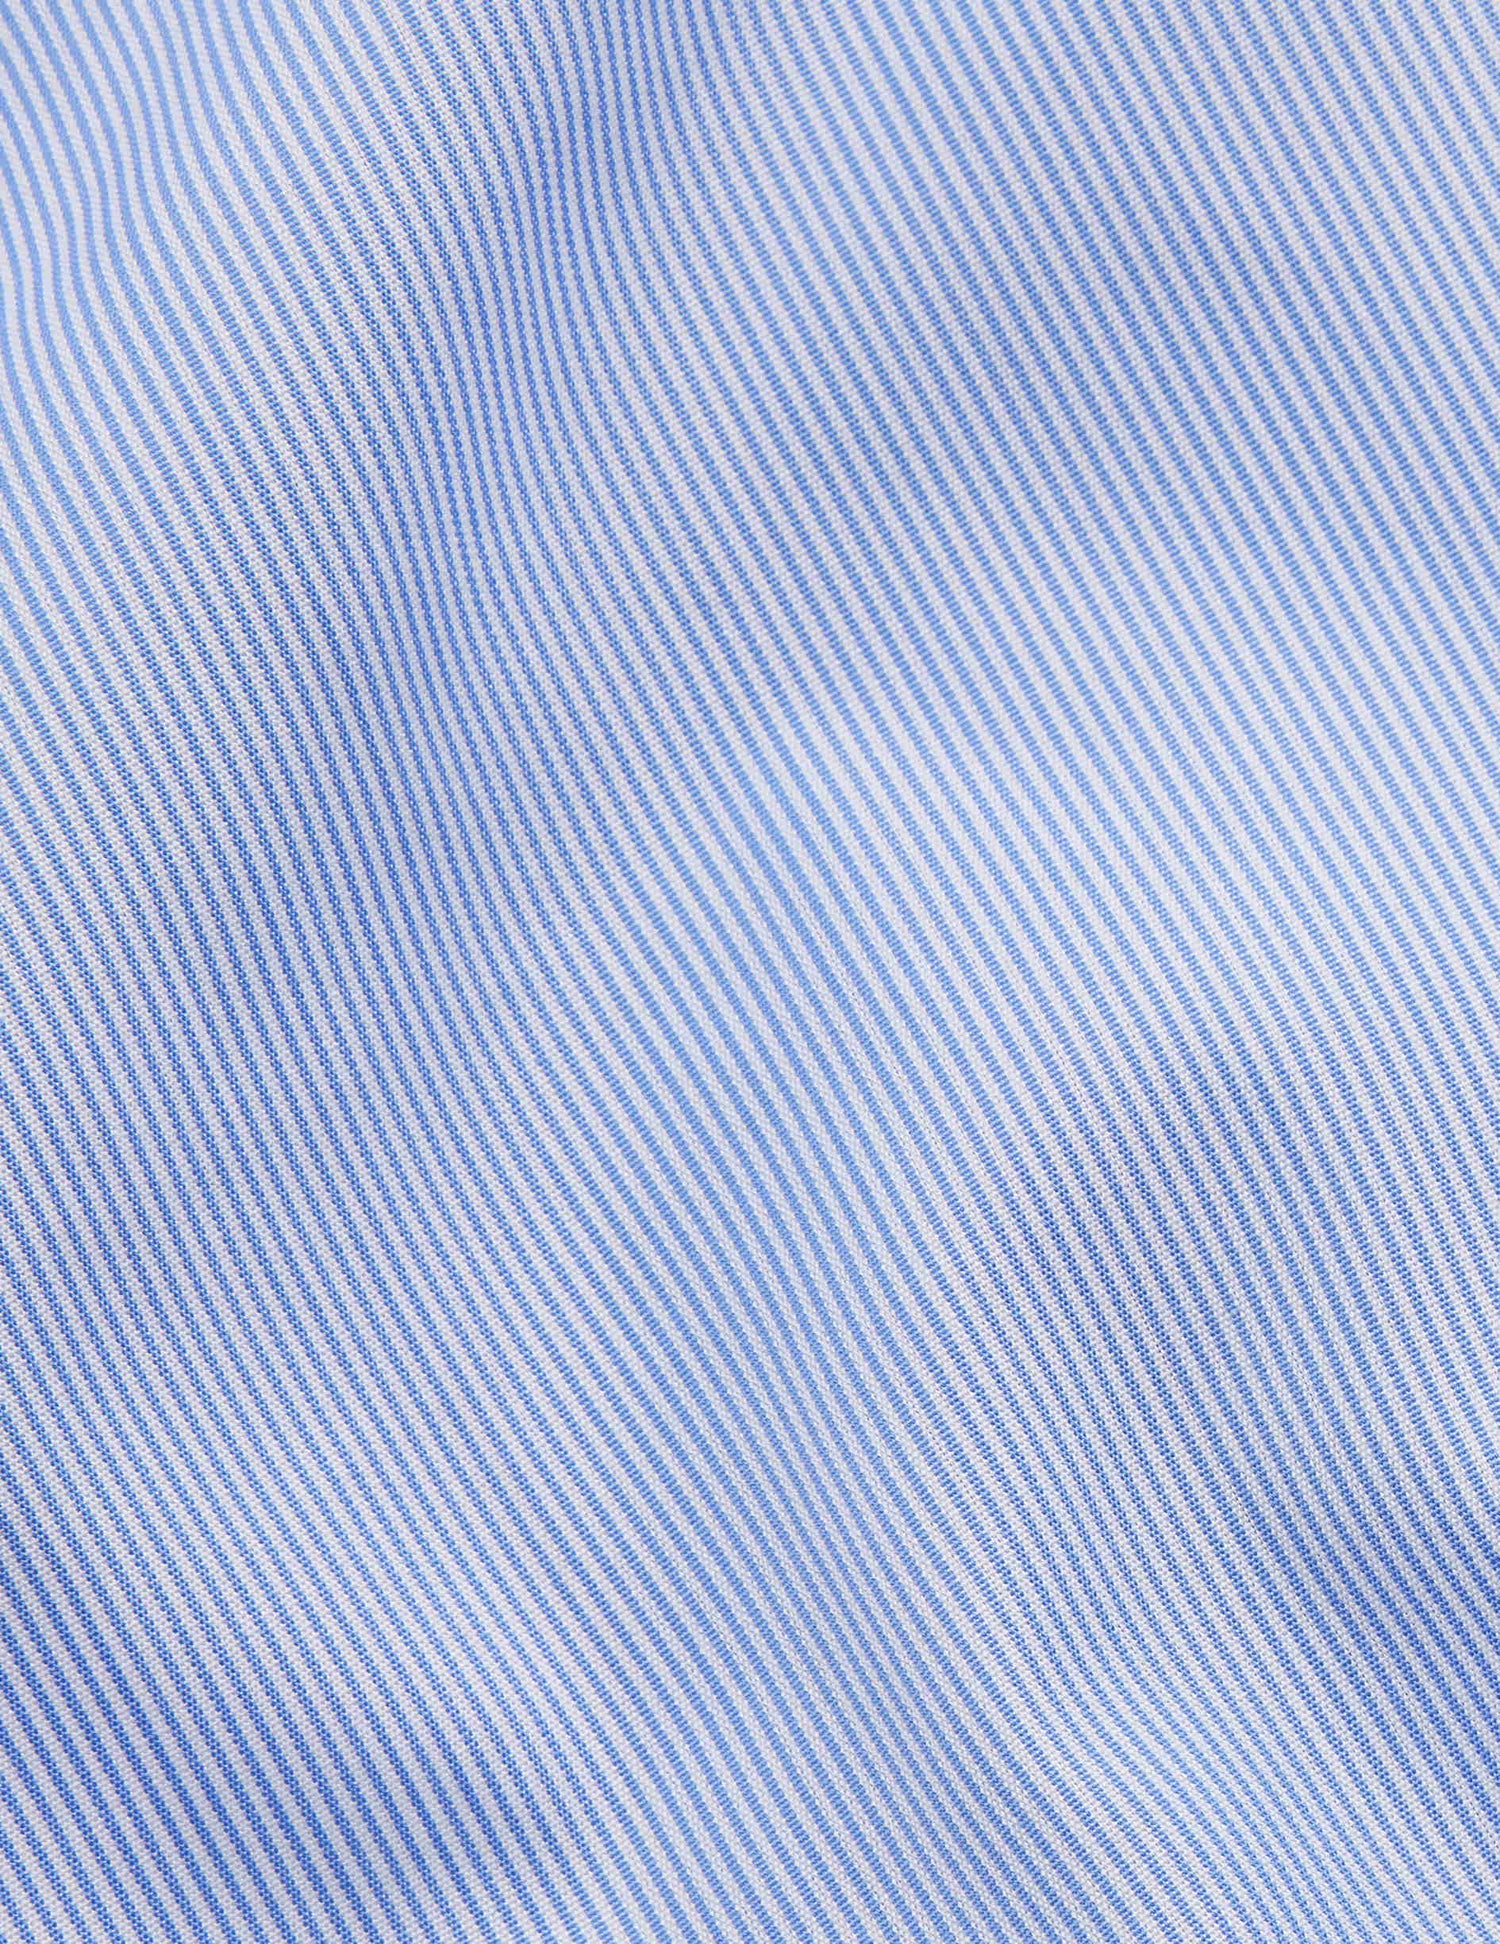 Classic blue striped shirt - Poplin - Italian Collar#2